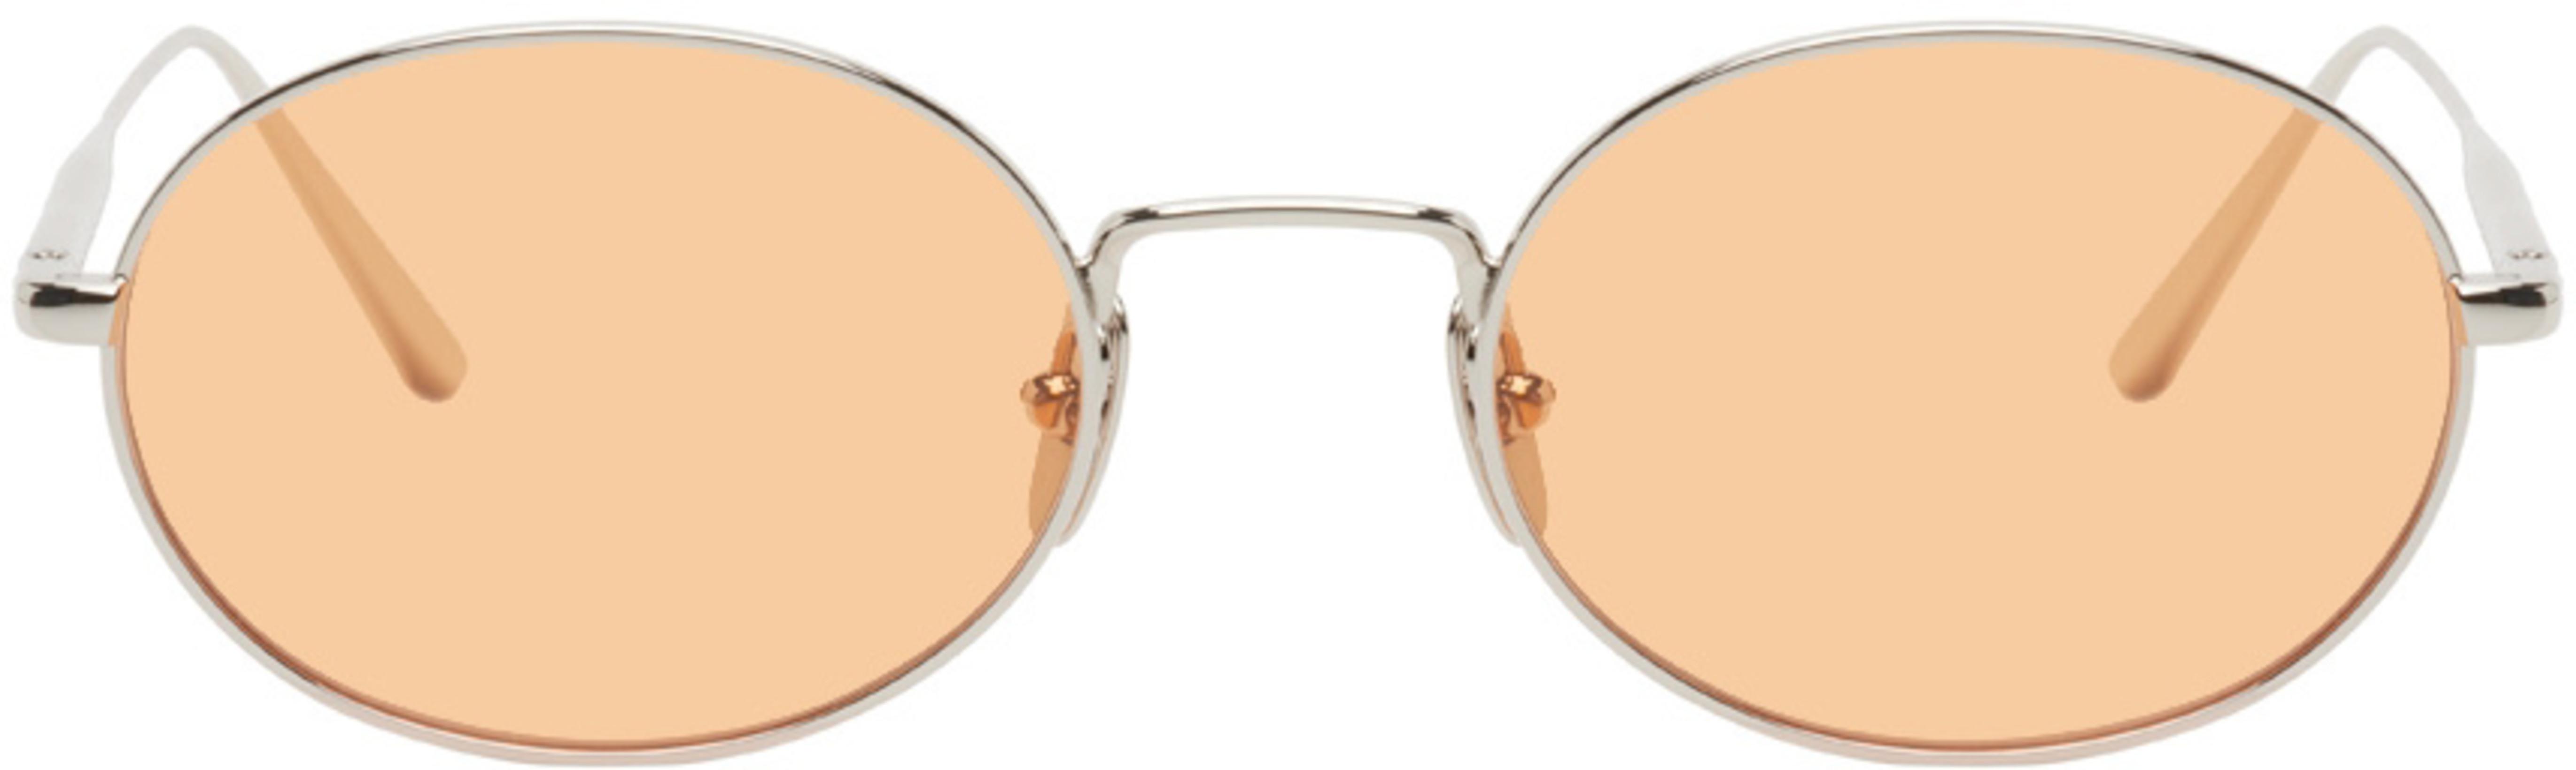 Silver & Orange Oval Sunglasses by CHIMI